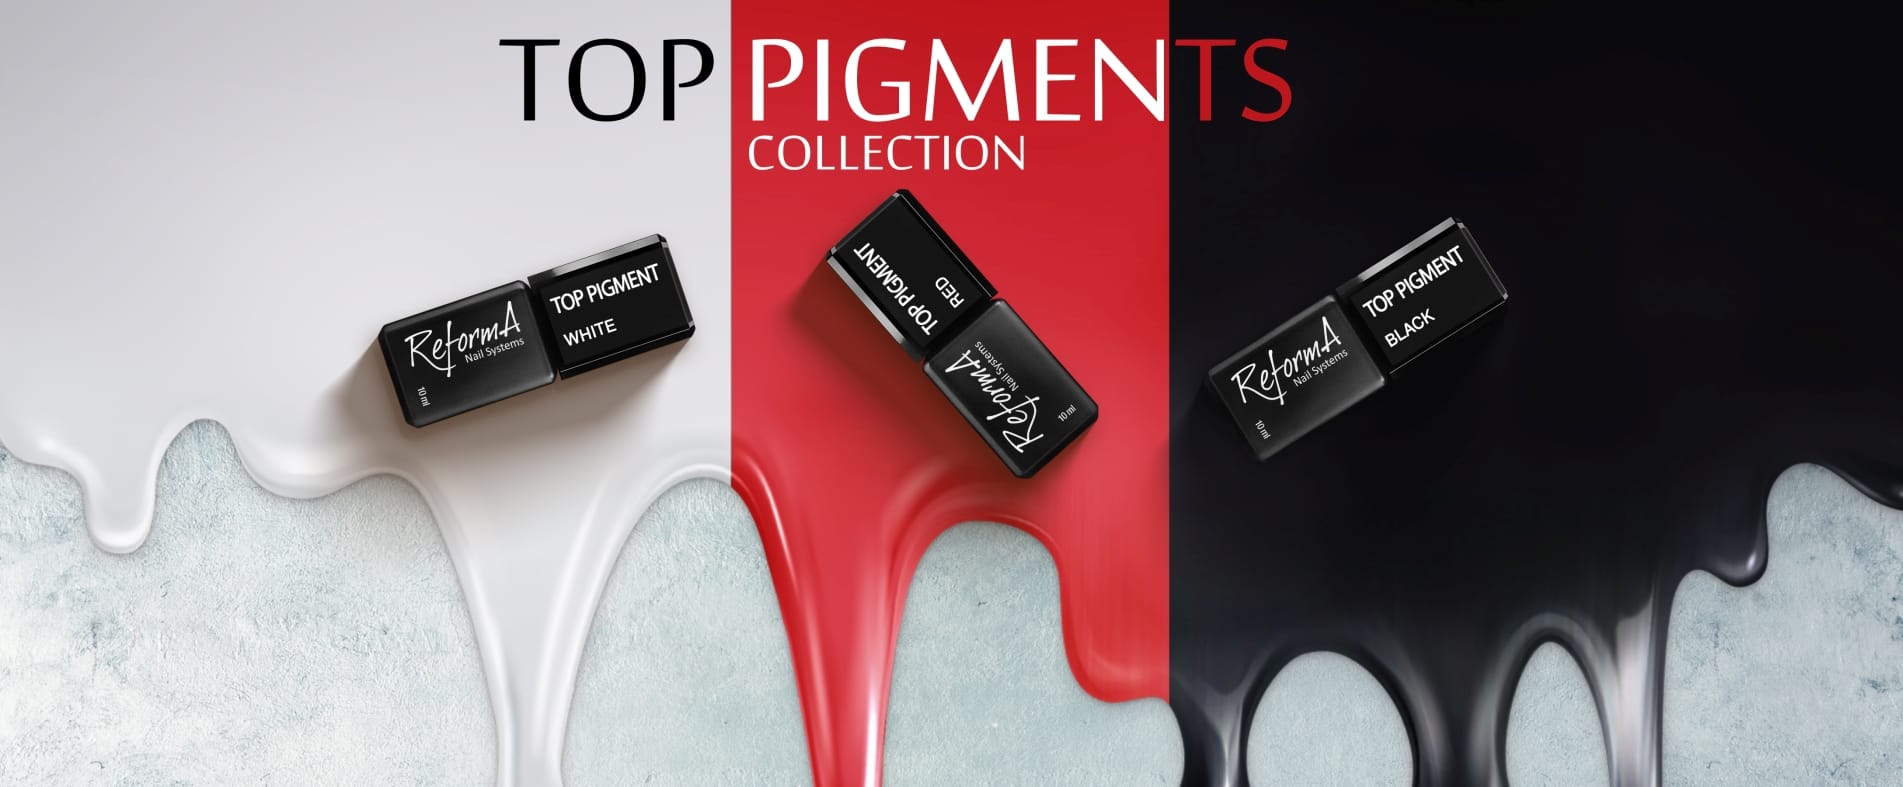 reforma top pigments collection slider